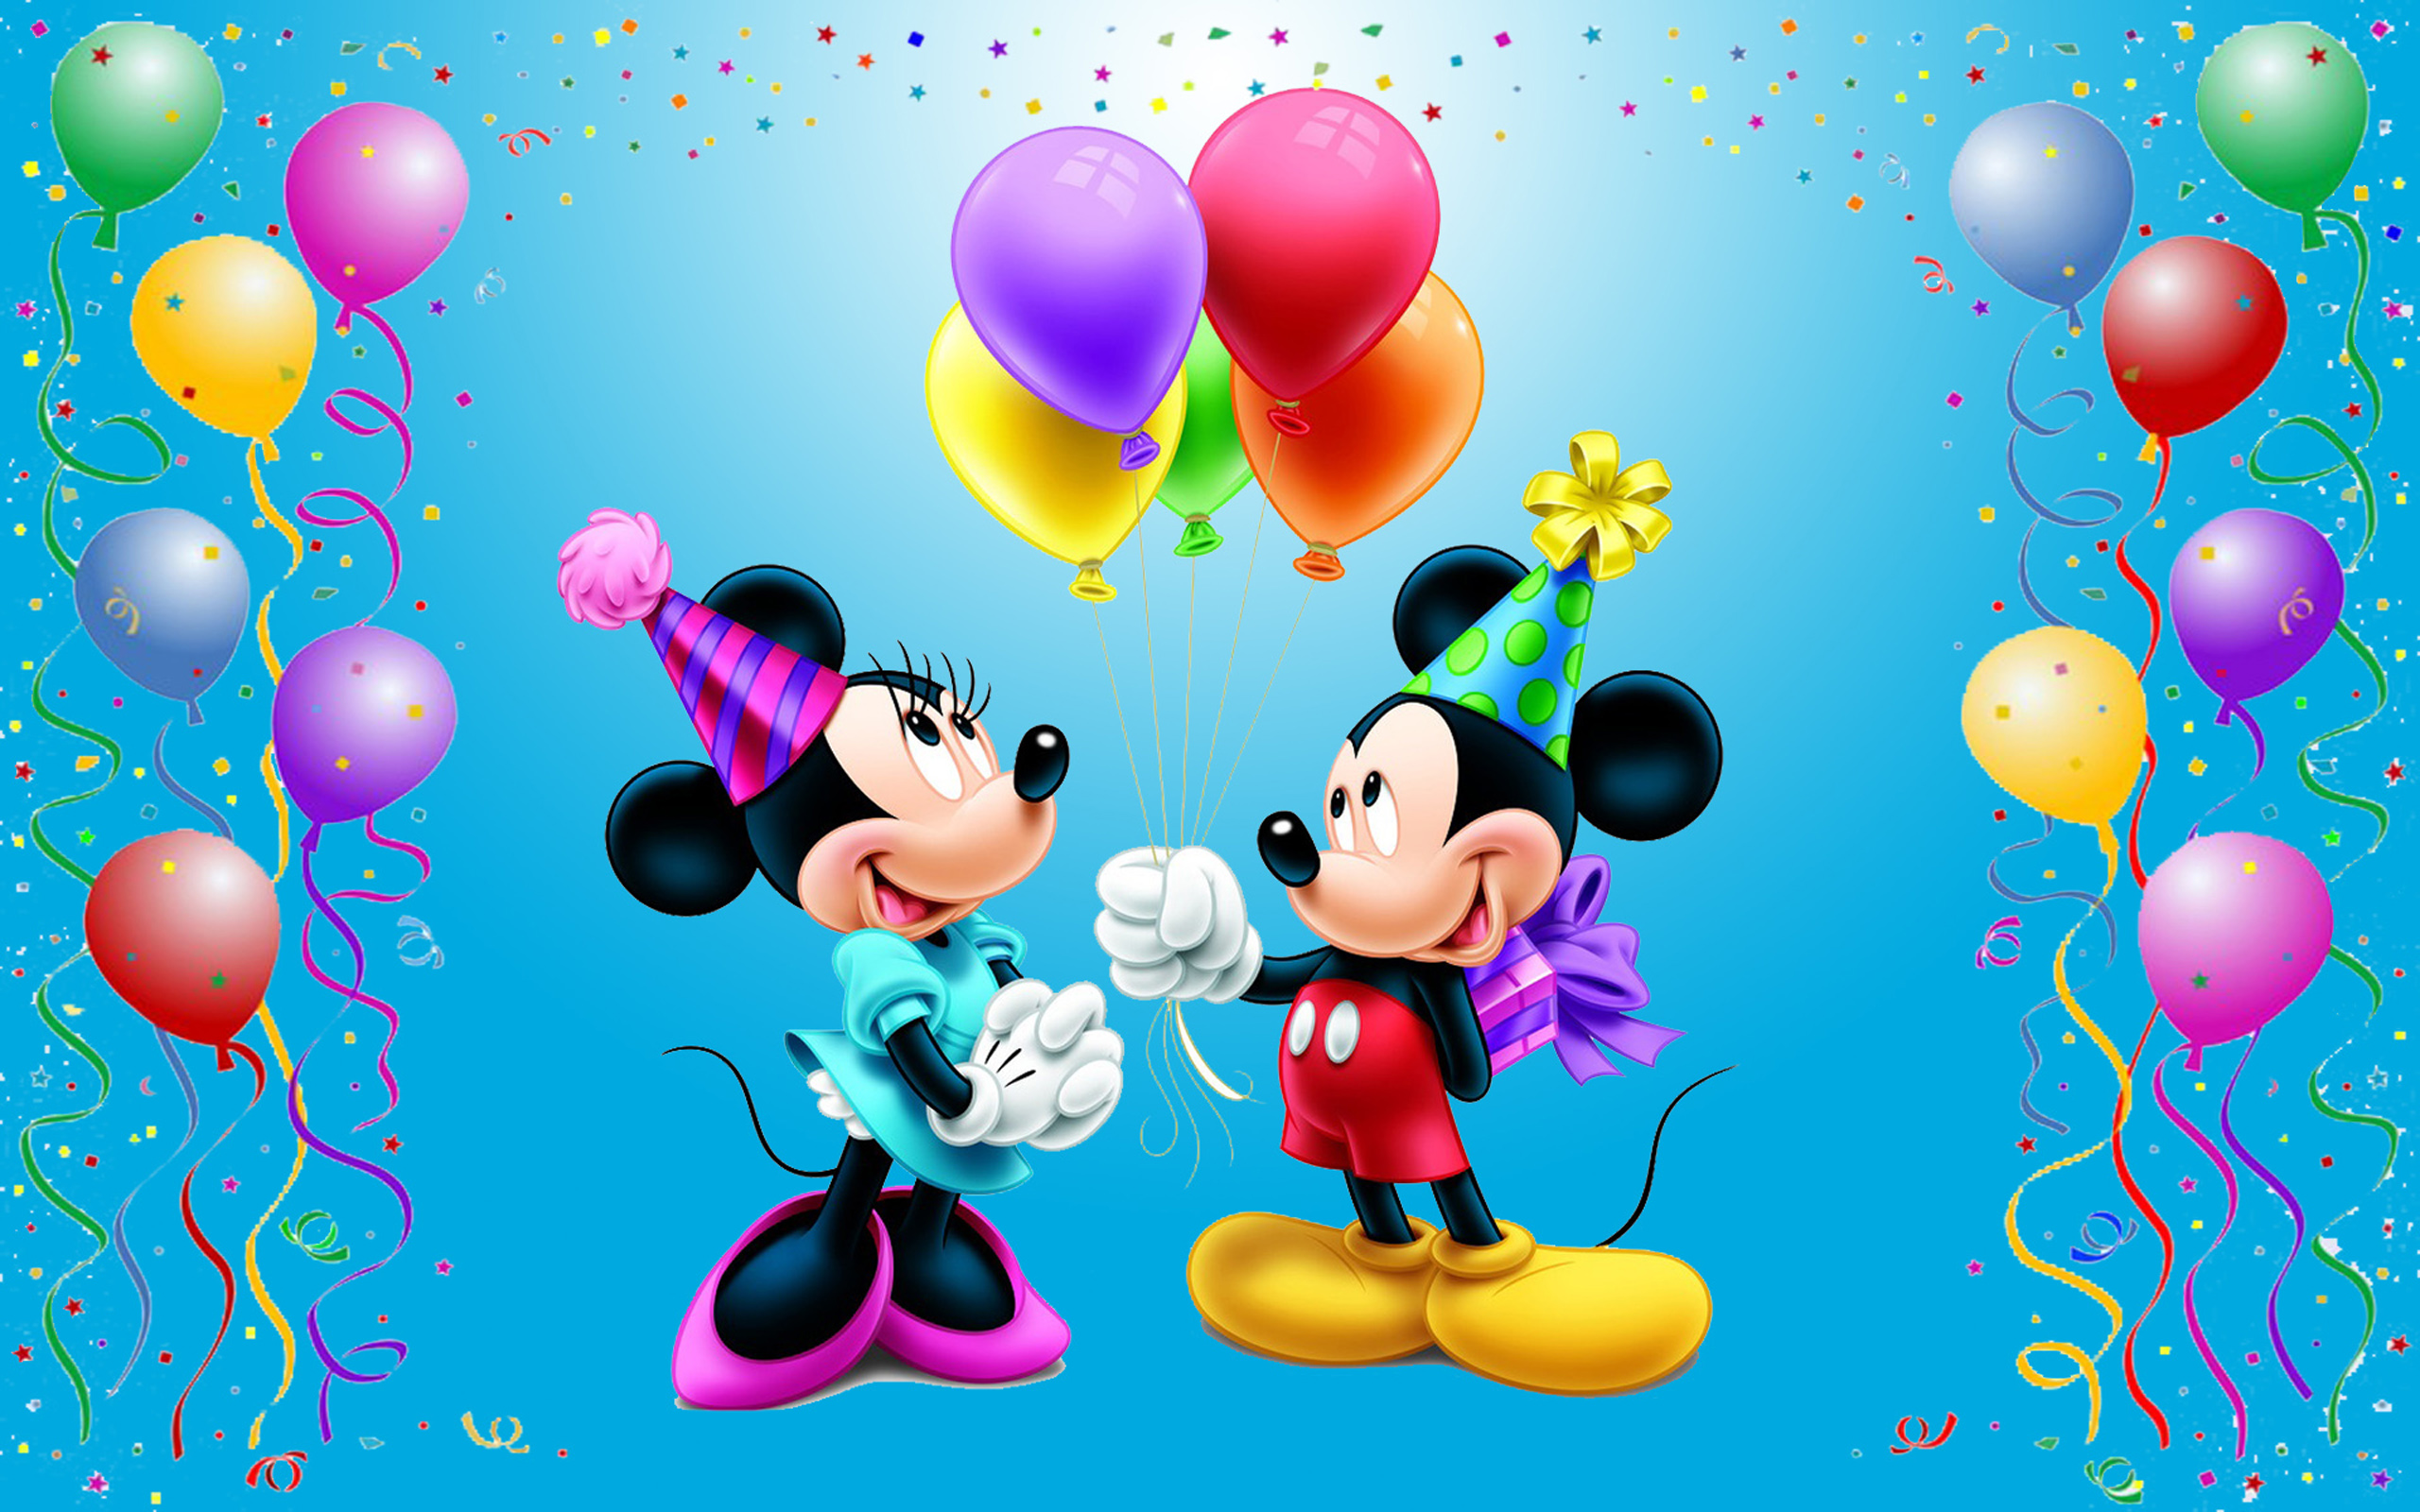 Mickey Mouse Happy Birthday Minnie Celebration Balloons Gifts For Mini Disn...